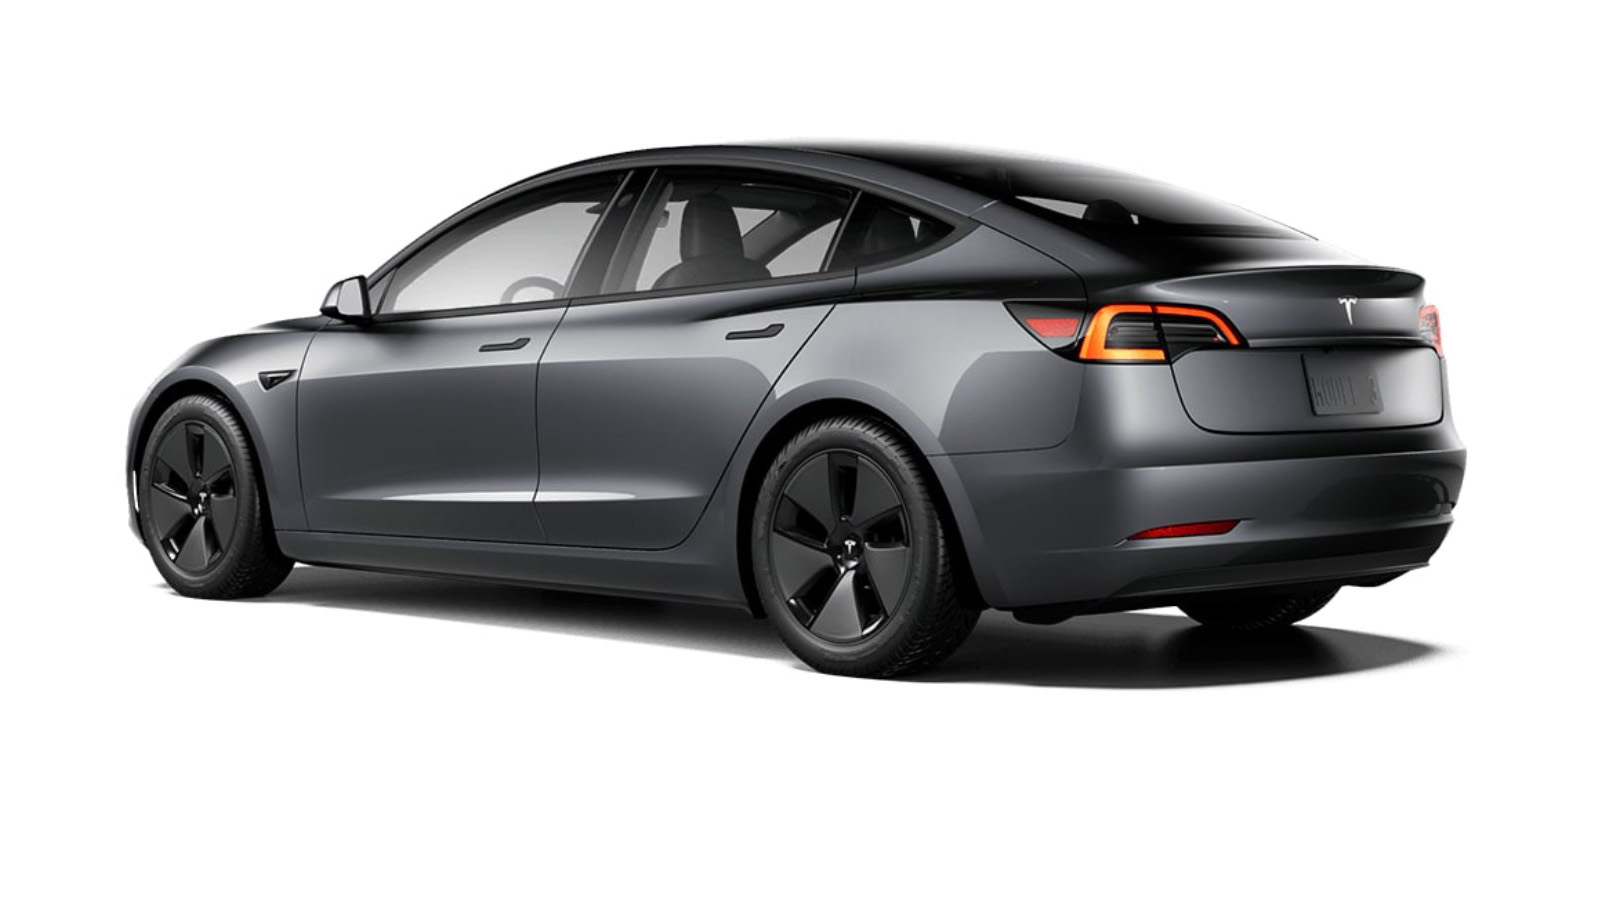 2024 Tesla Model 3 Highland Lease Has Same Price At $329/mo